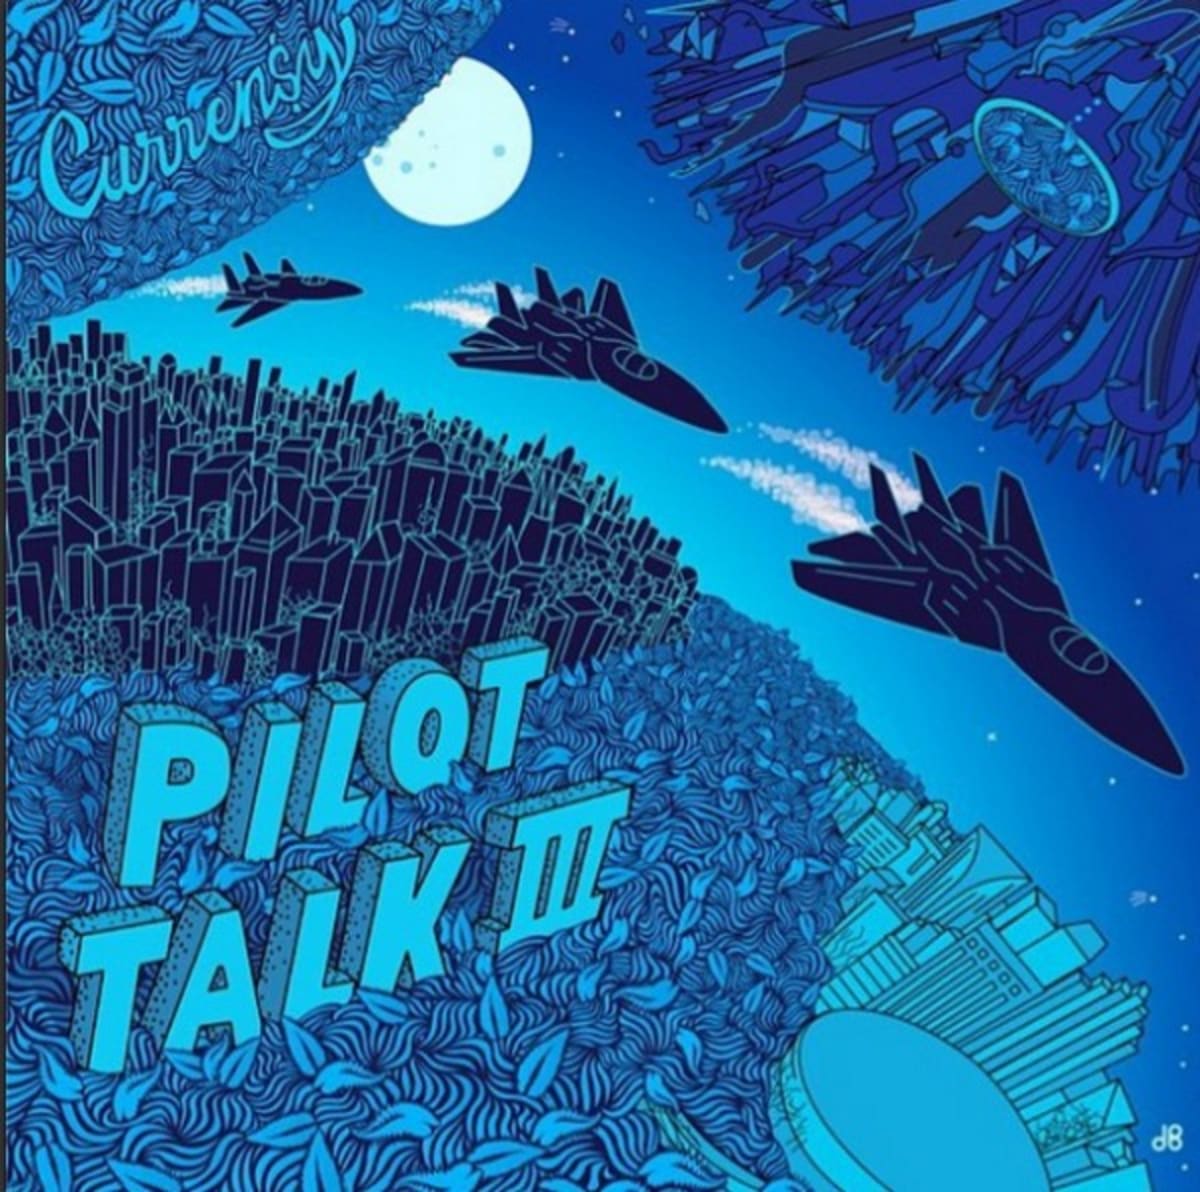 currensy pilot talk trilogy album